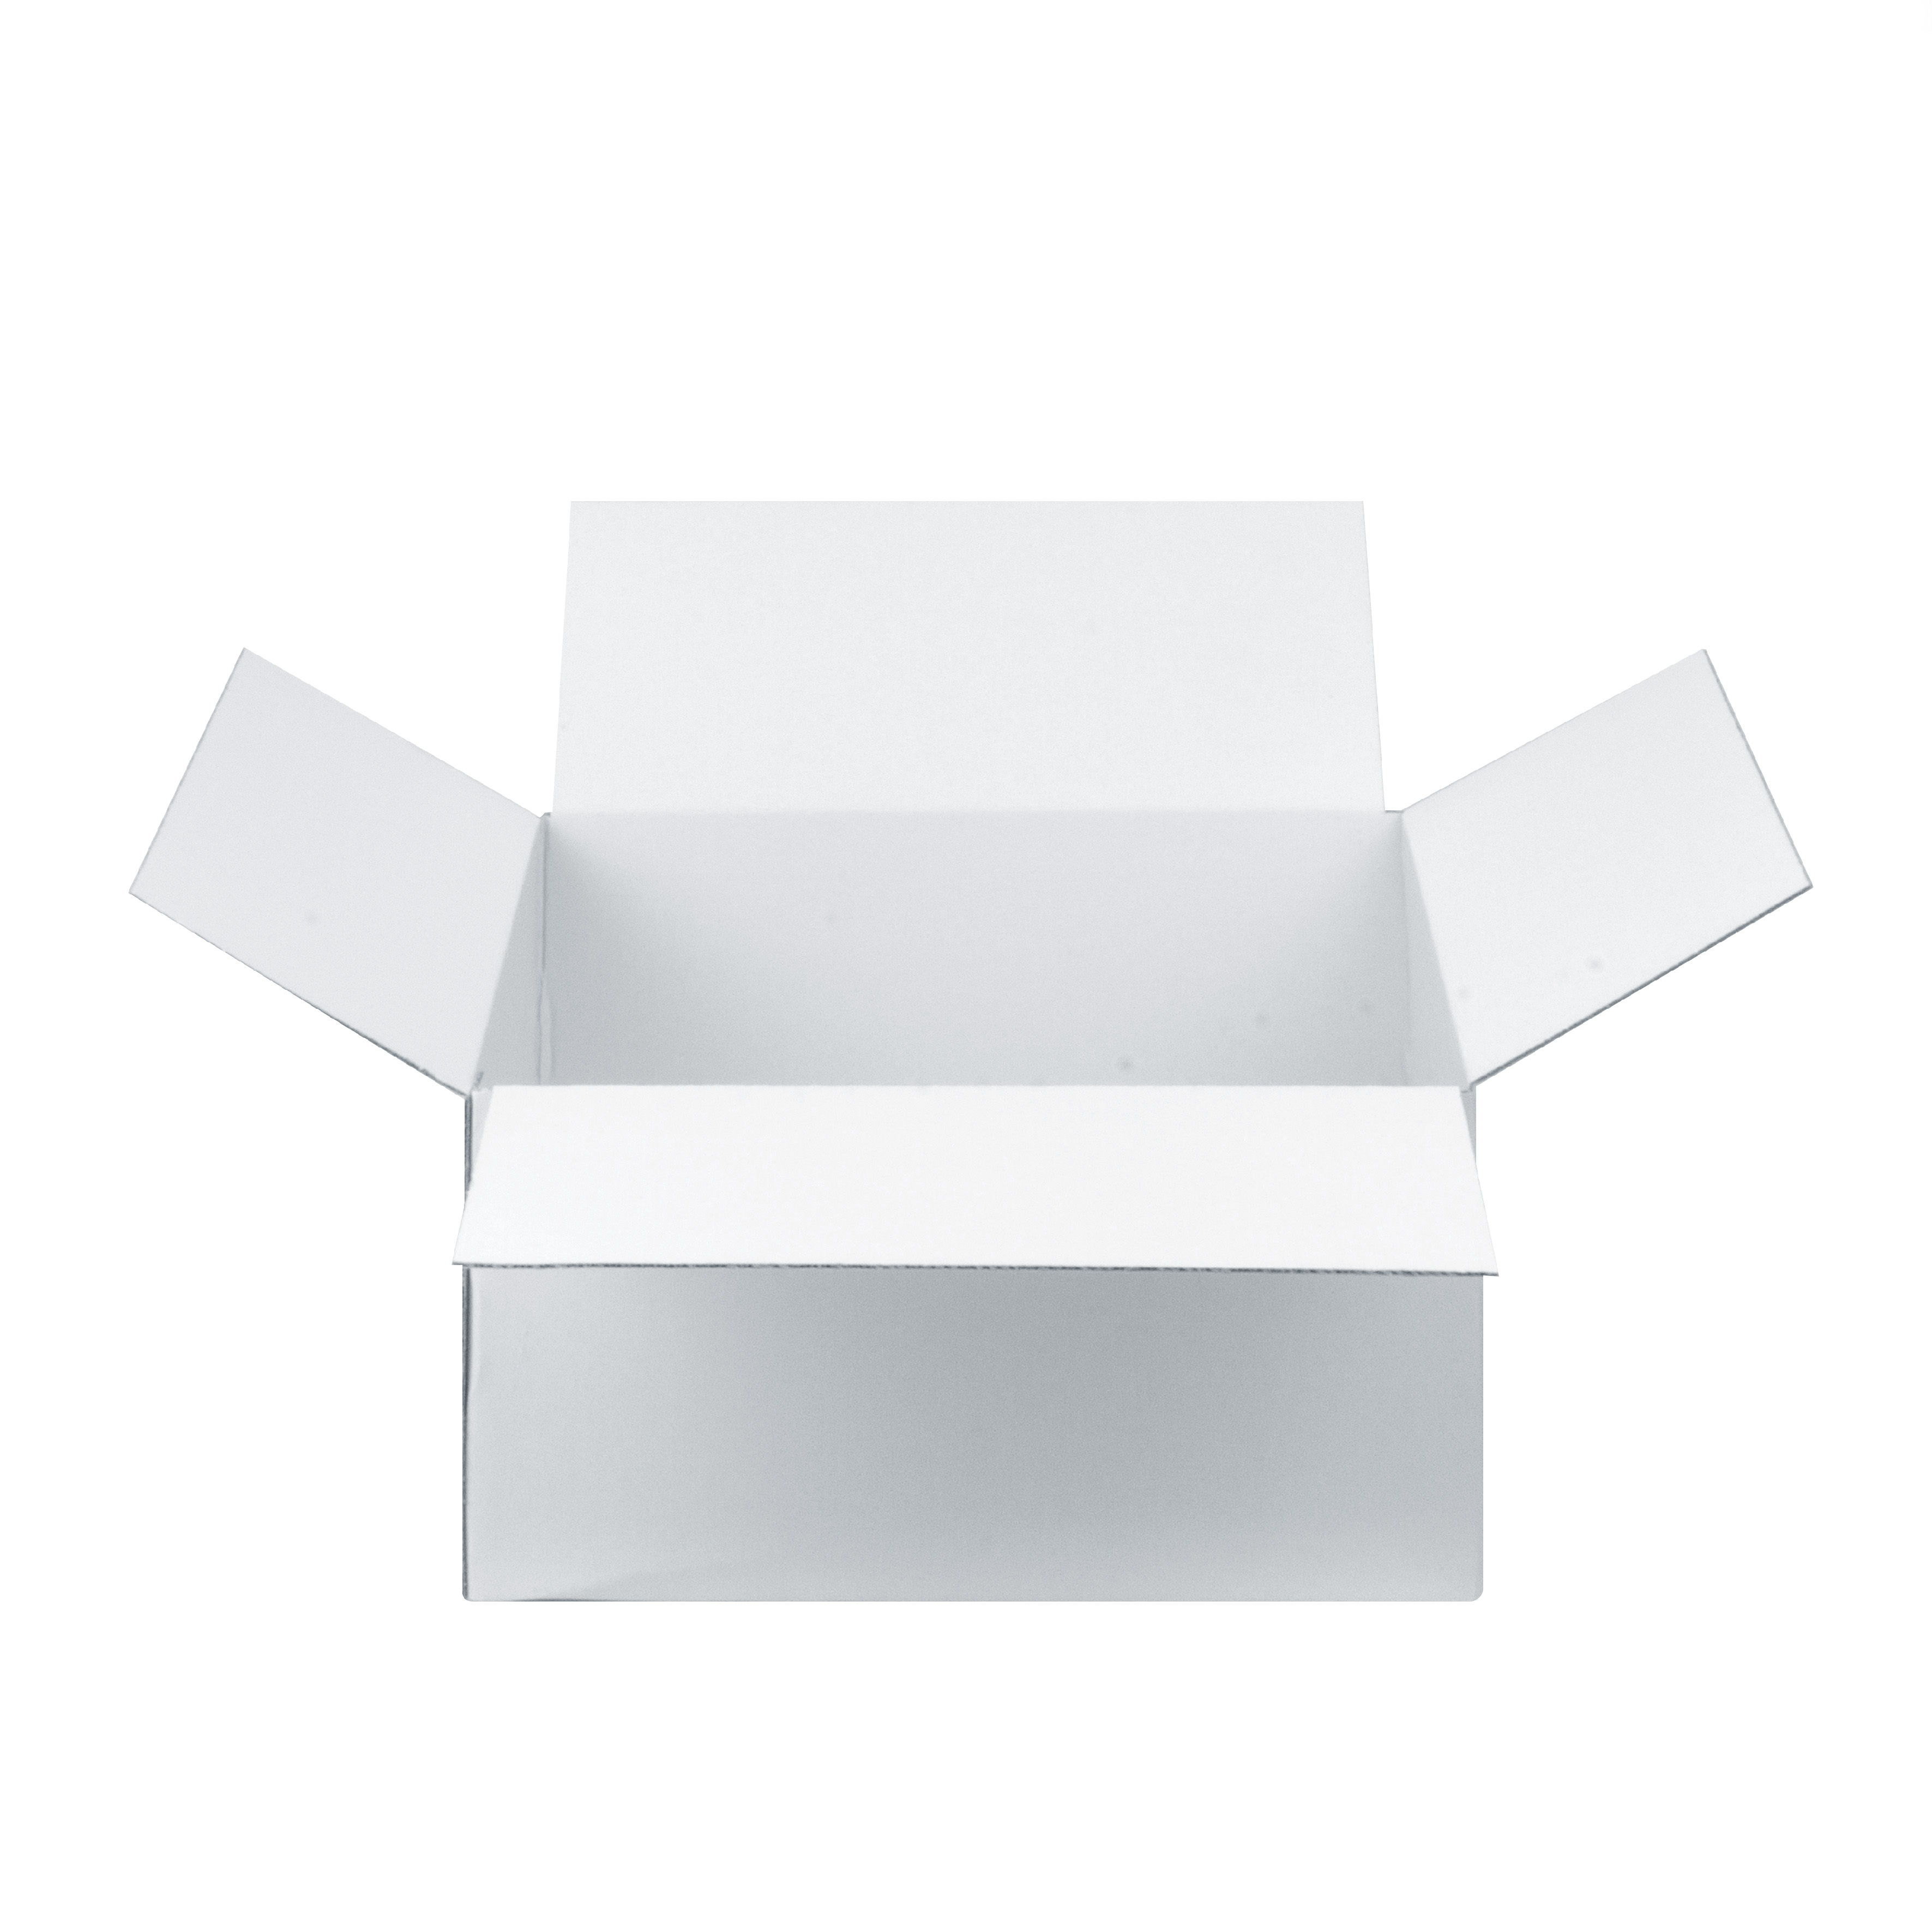 Scatola americana in cartone Bianco/Bianco (Sp. 1,5mm - 4,5mm) - Neutra